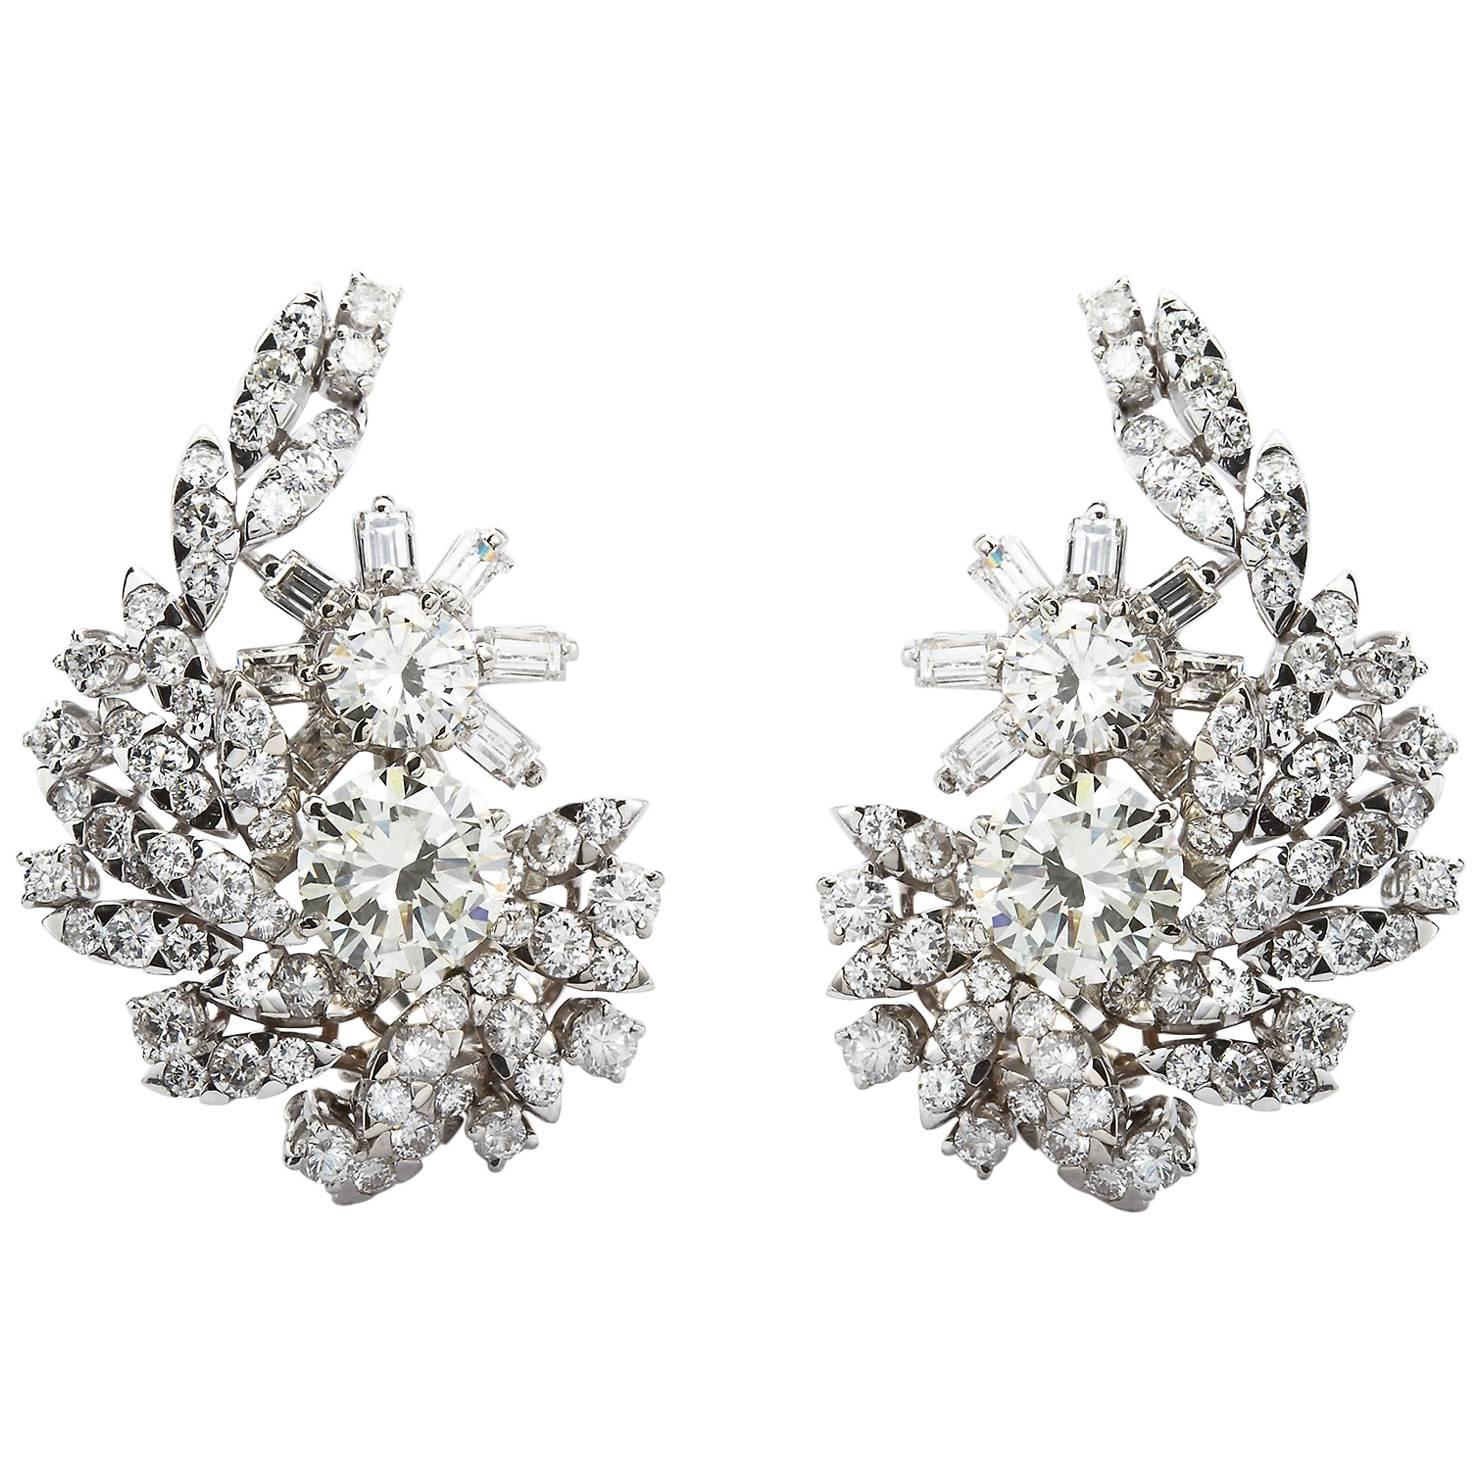 18 Carat Diamond Cluster Earrings